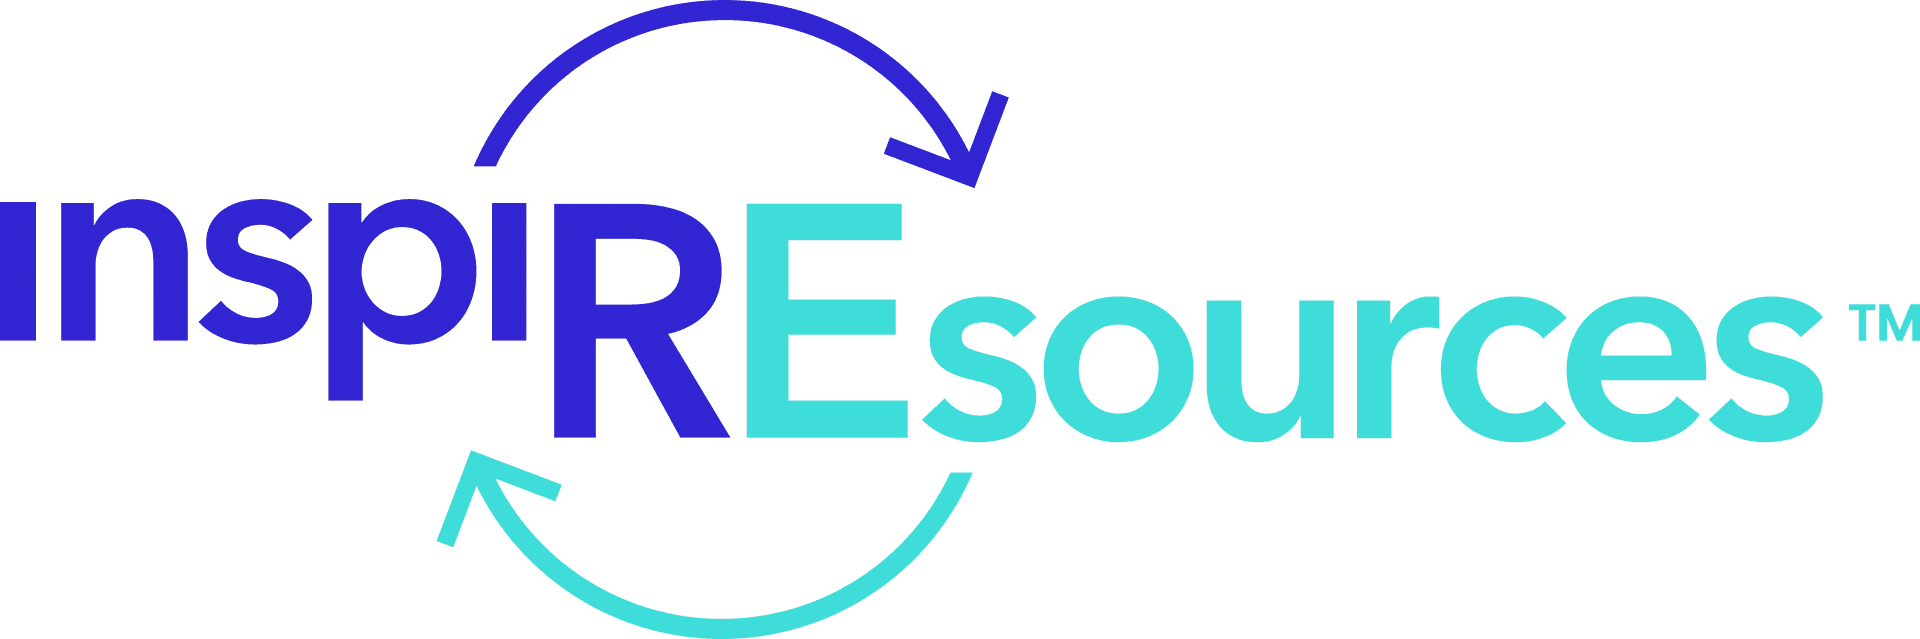 Inspire Sources logo